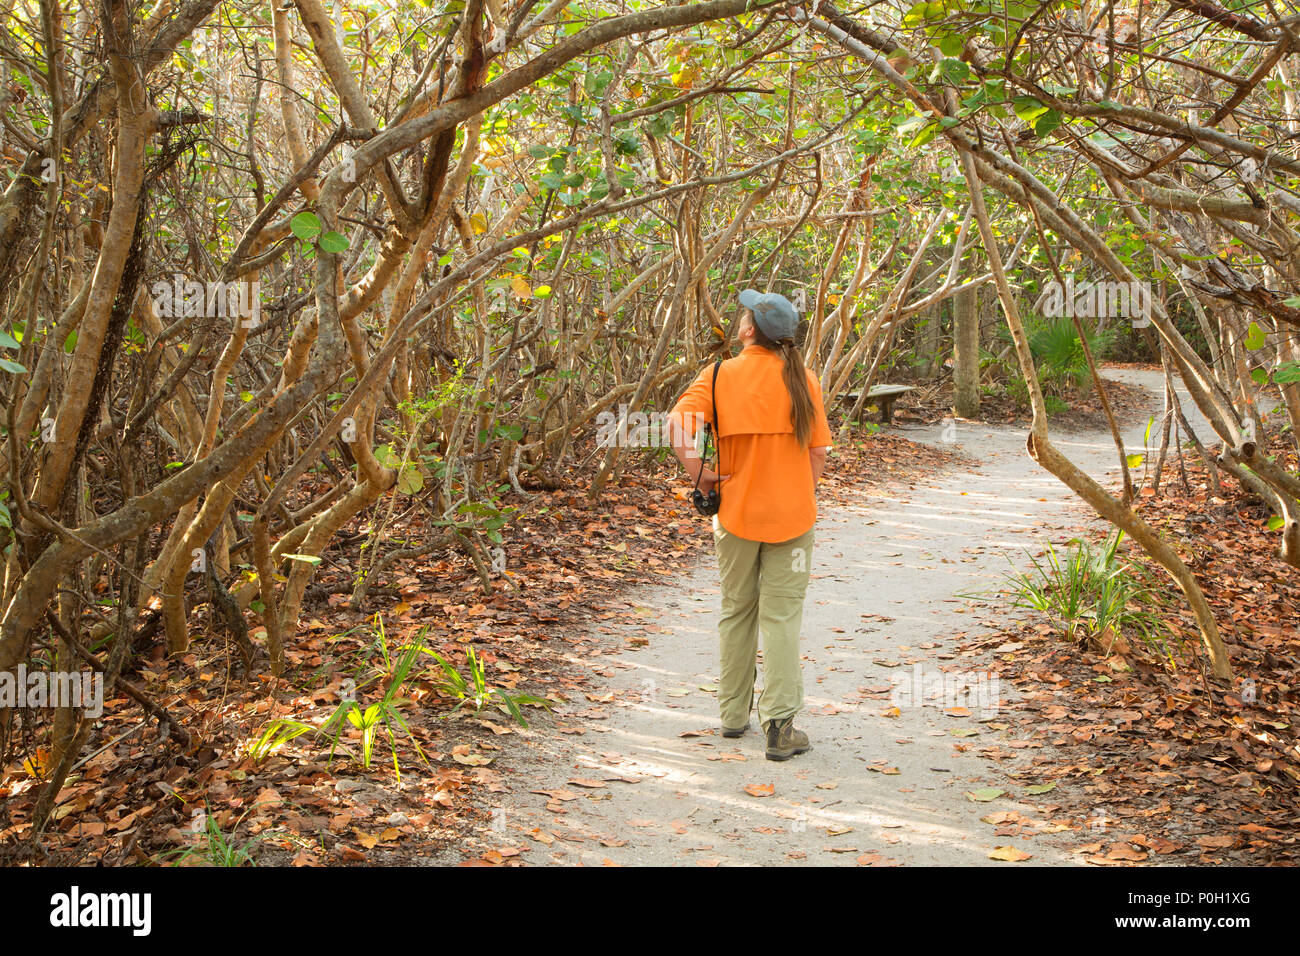 Trail through coastal scrub, Blowing Rocks Preserve, Florida Stock Photo